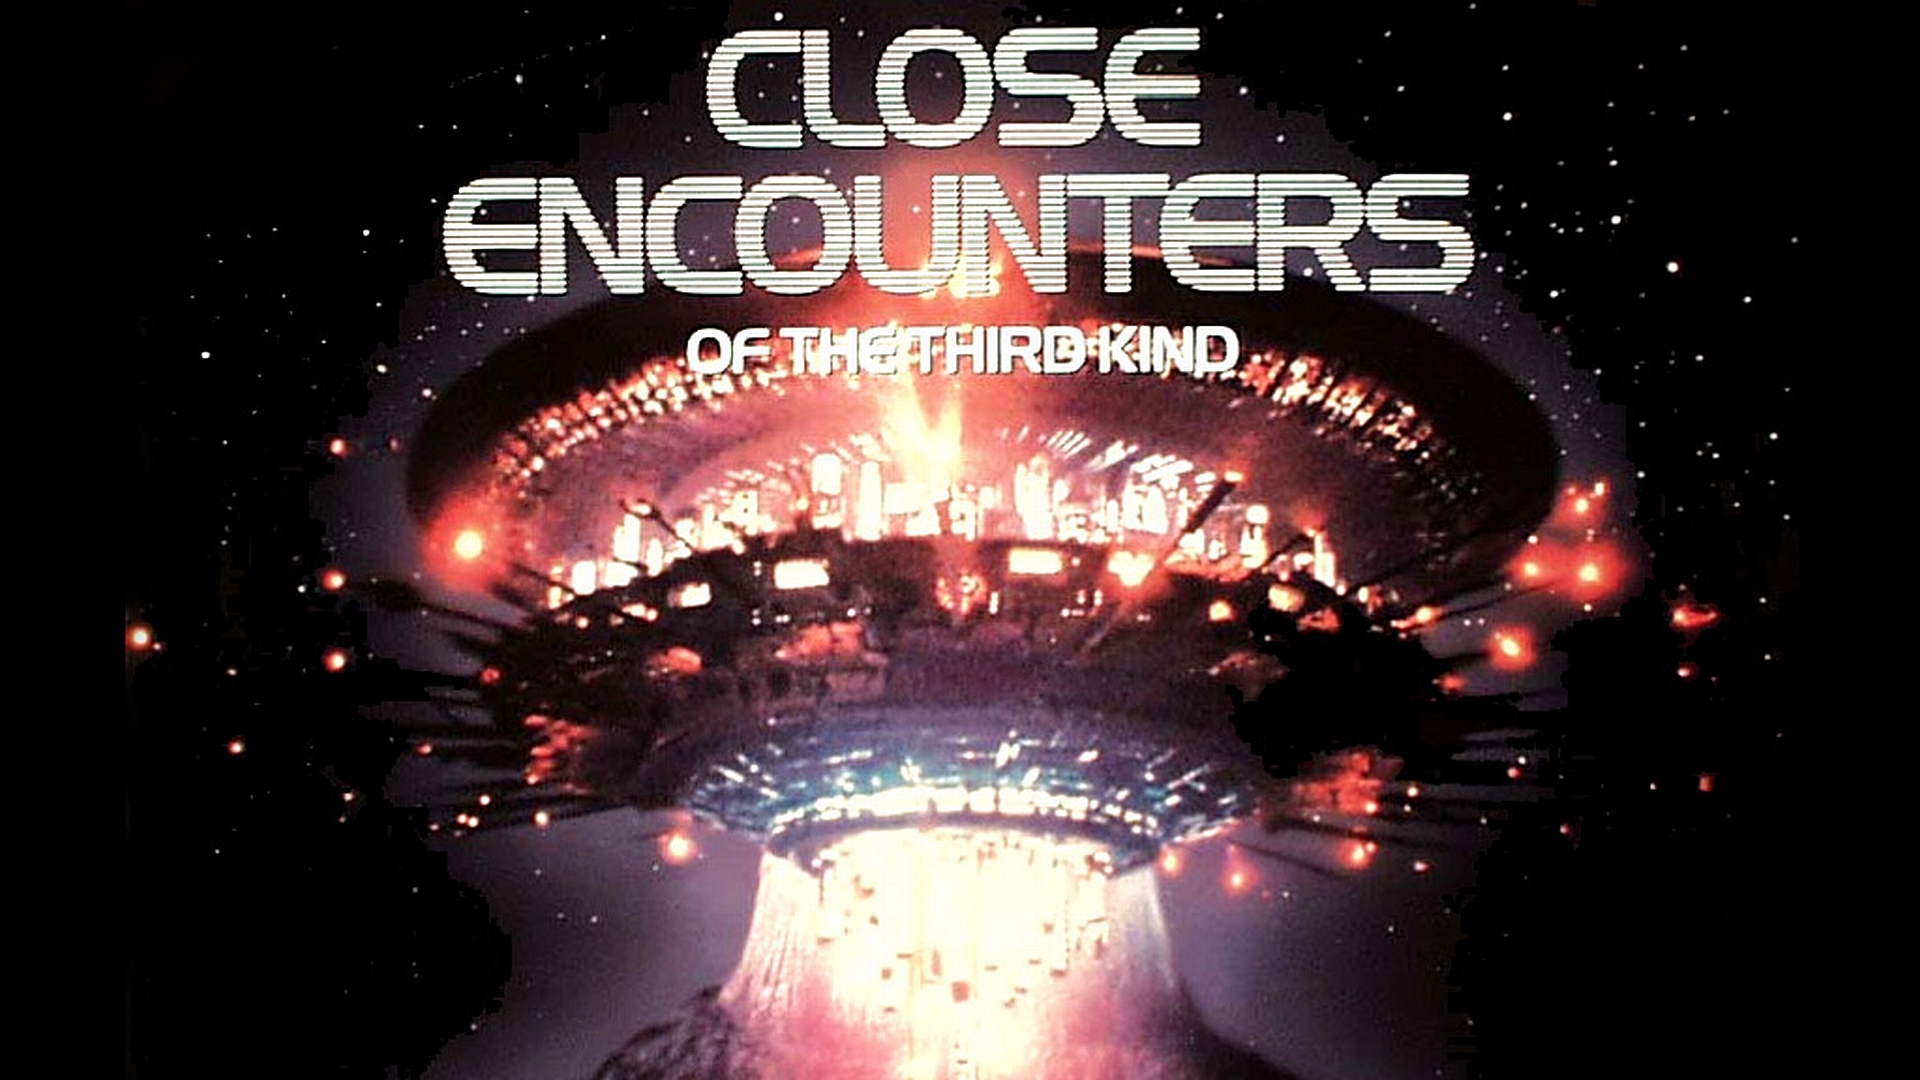 Encounters 4. Close encounters of the third kind. Близкие контакты 3 степени.